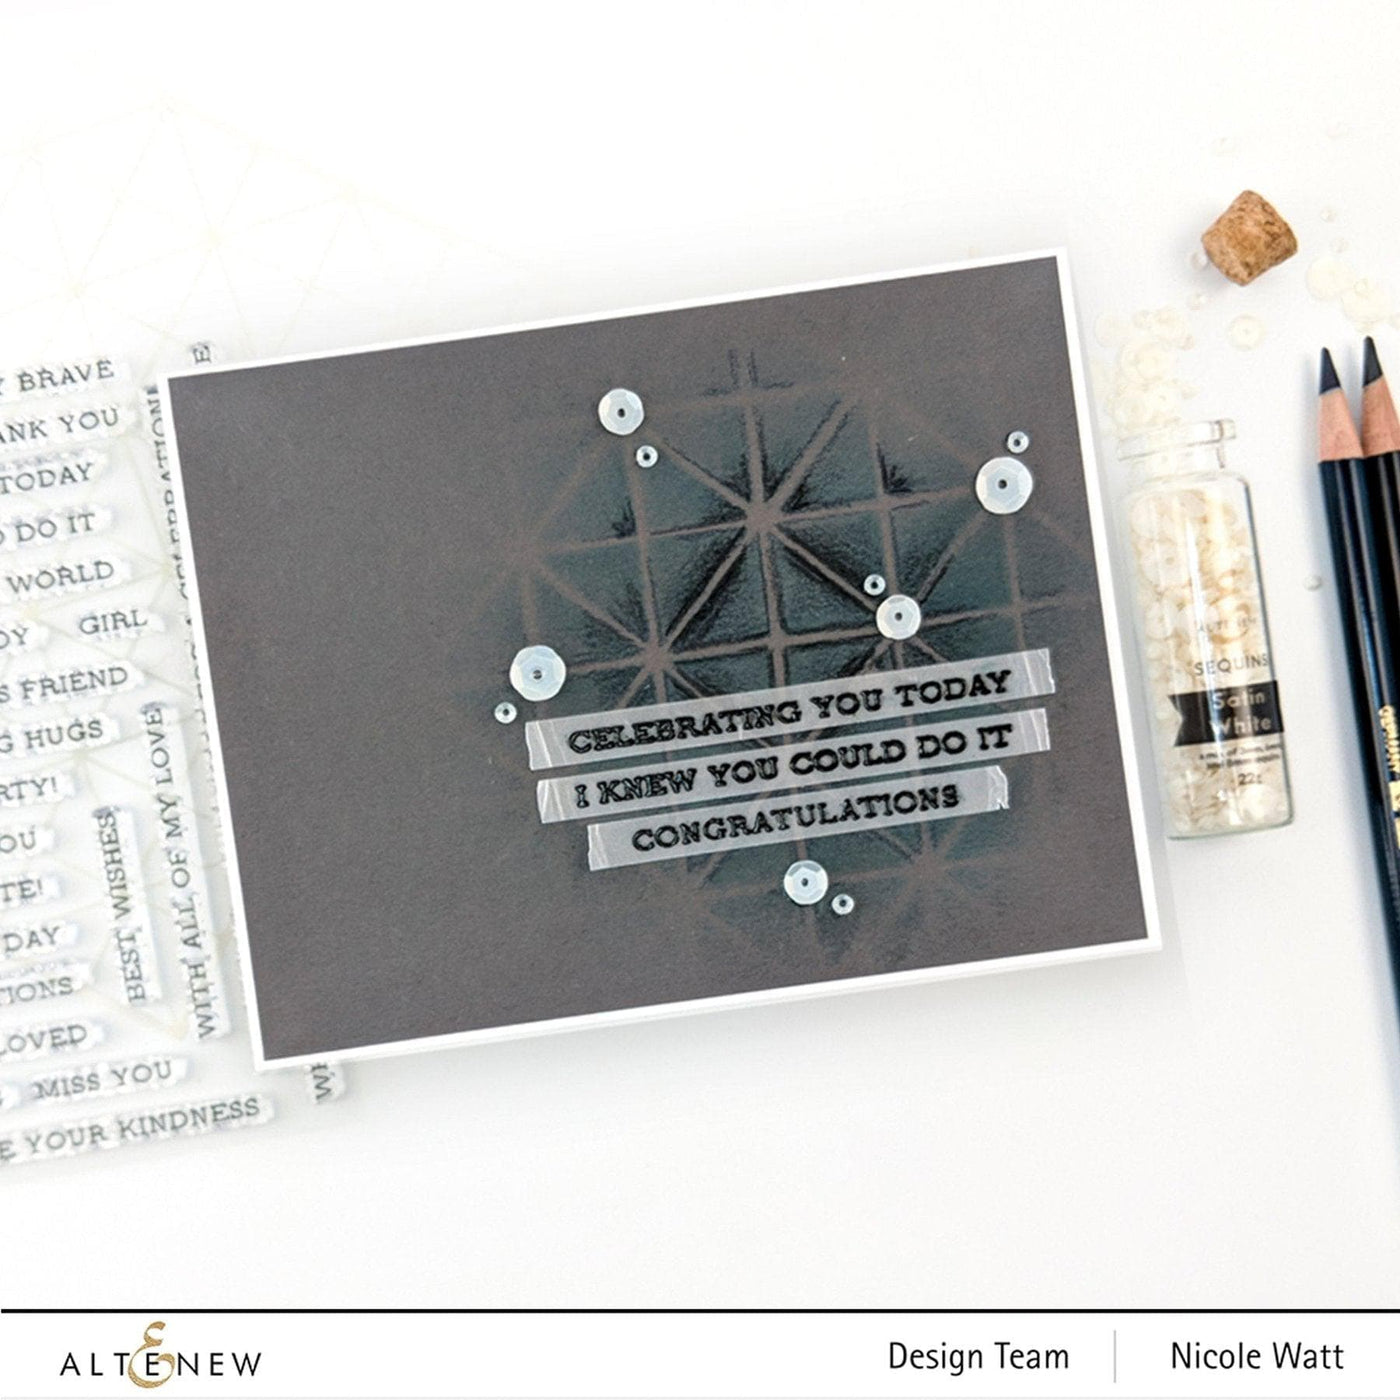 Altenew Creativity Kit Featurette Patterned Paper Hacks Class